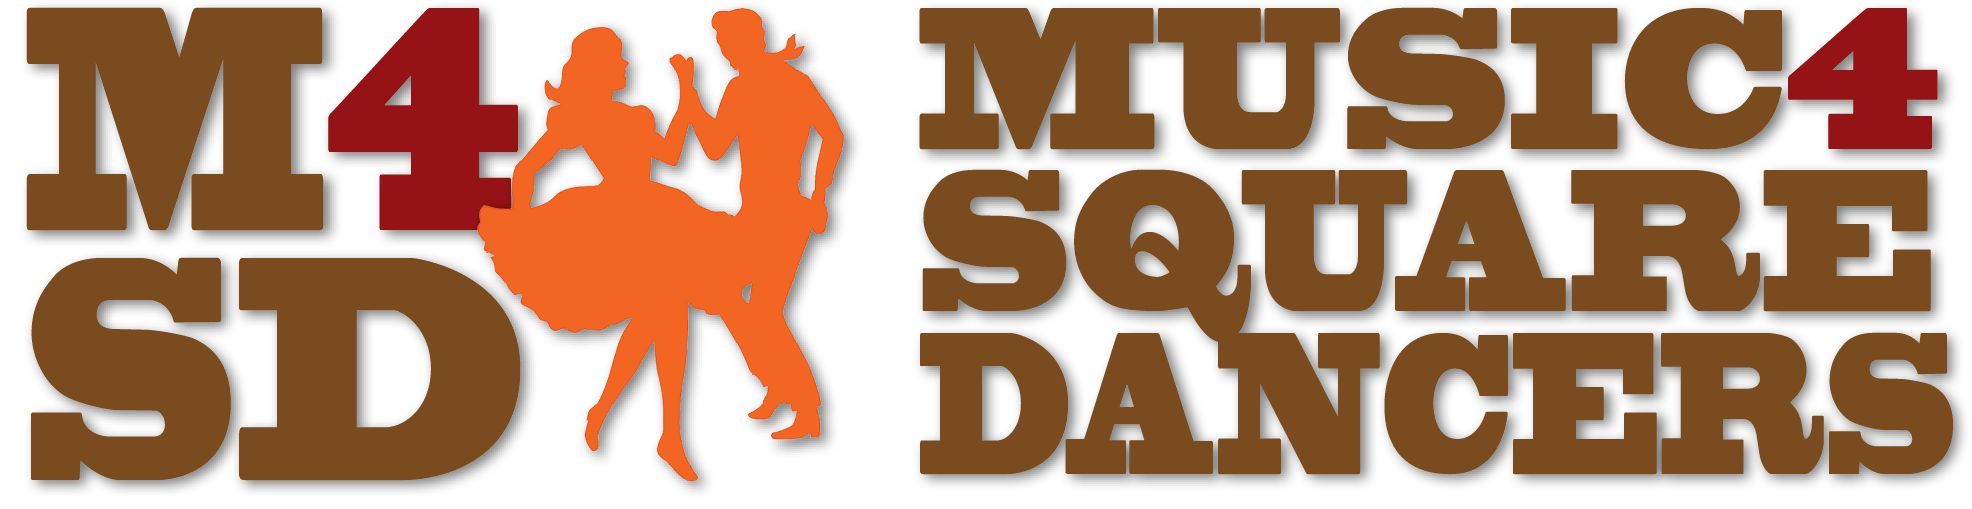 M4SD logo initials w dancers.png